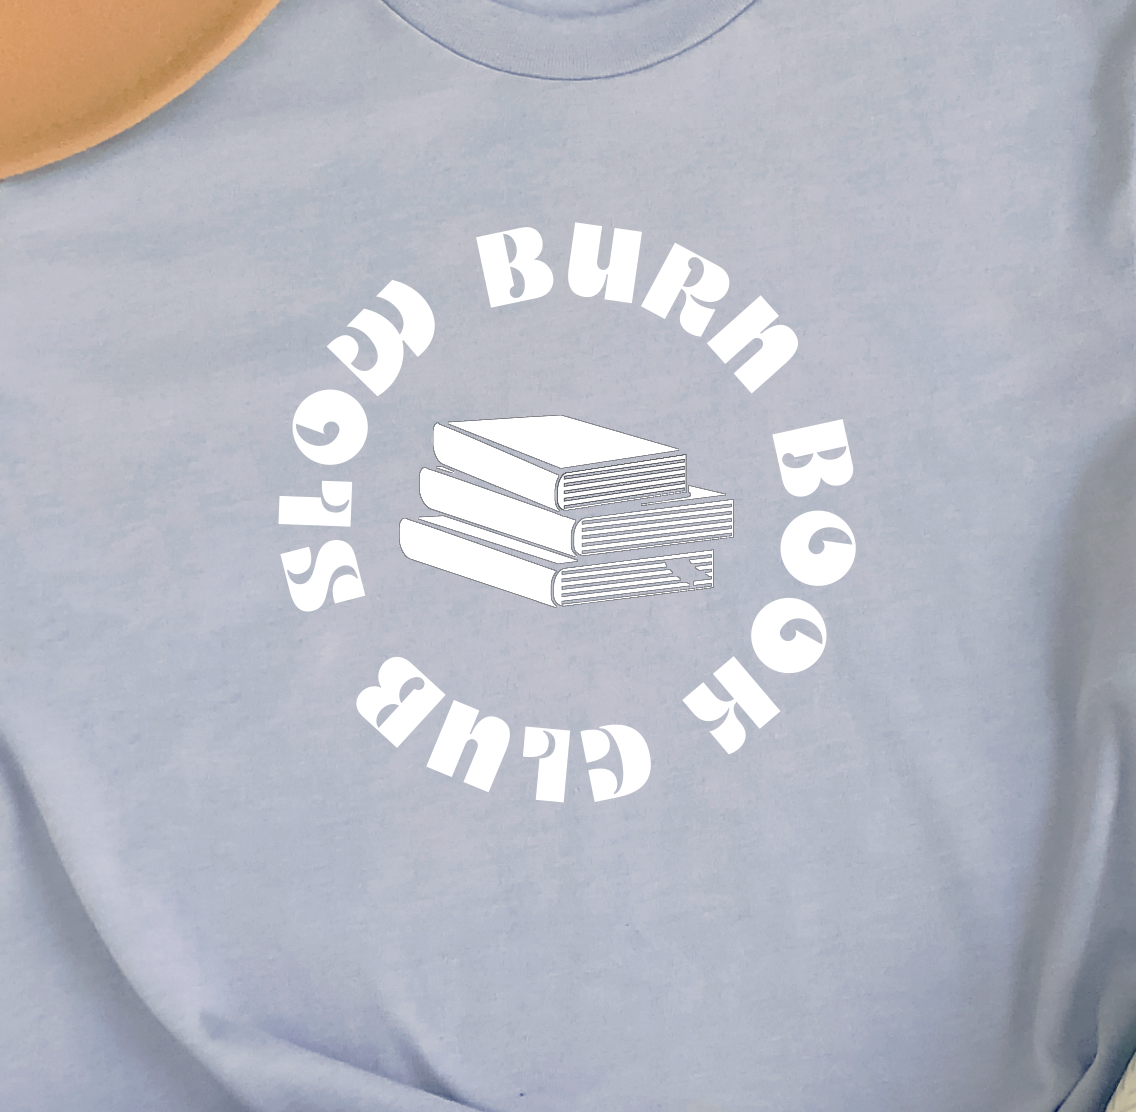 slow burn book club t-shirt